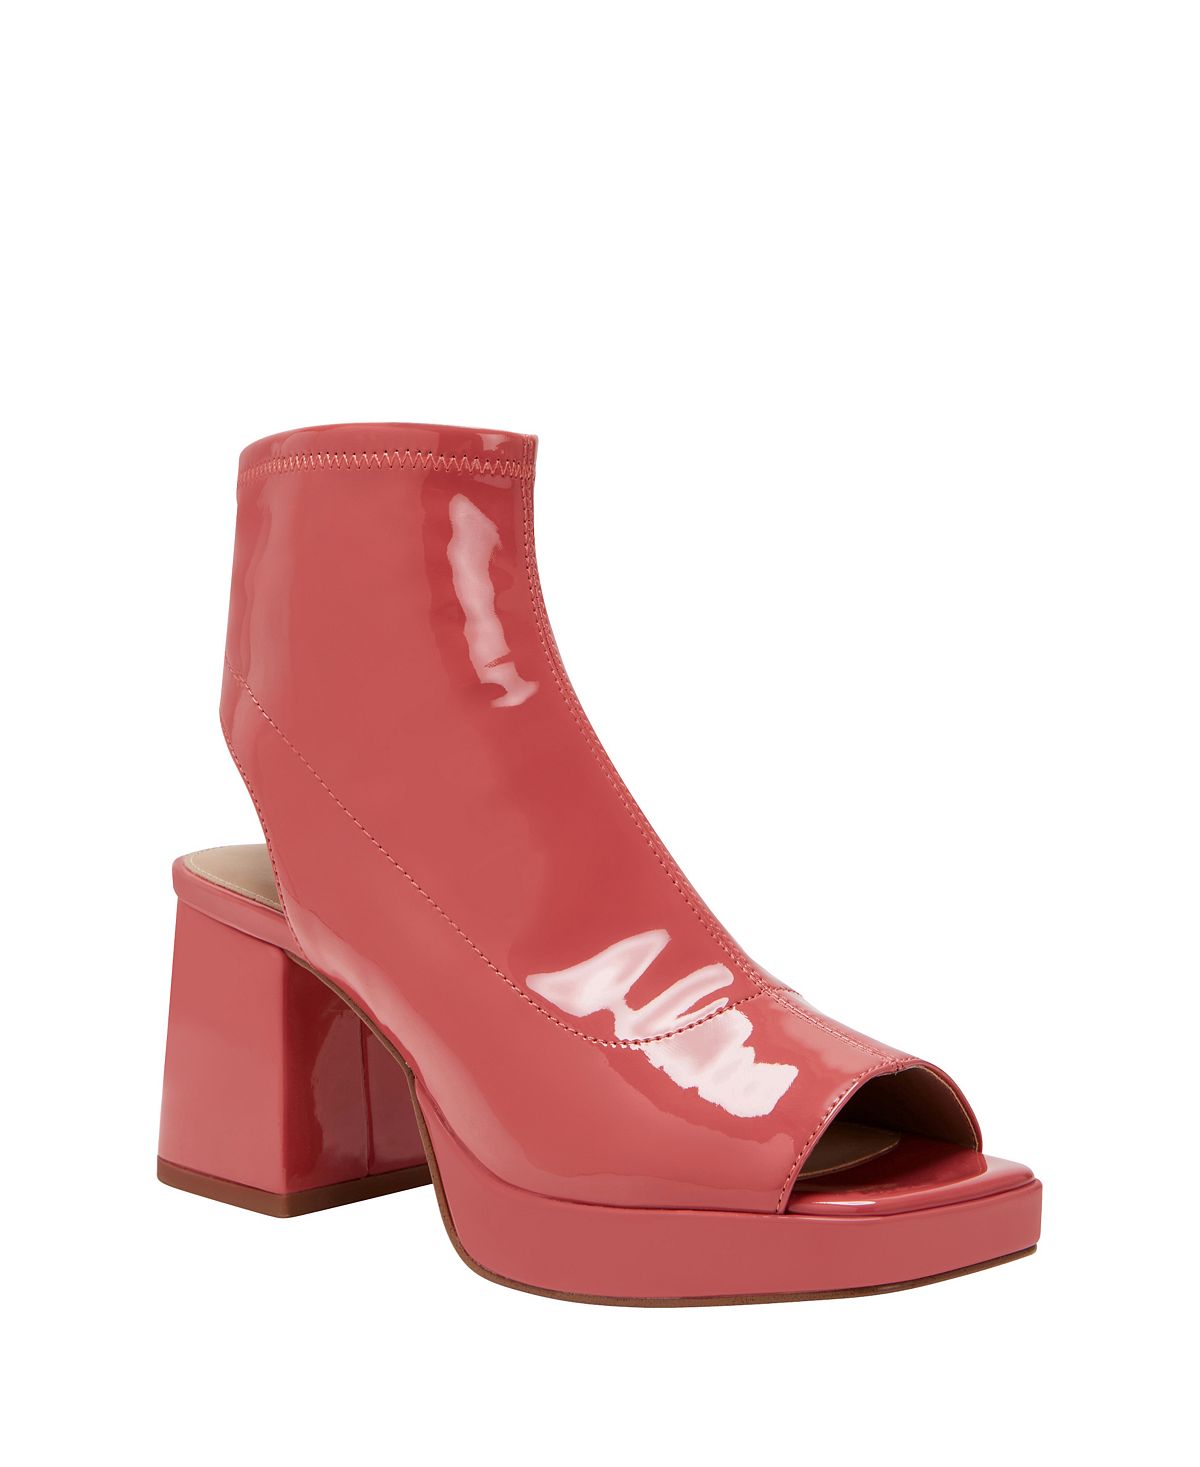 Женские туфли-лодочки The Surrprise на блочном каблуке и платформе Katy Perry комплект нижнего белья seduction katy red s размер